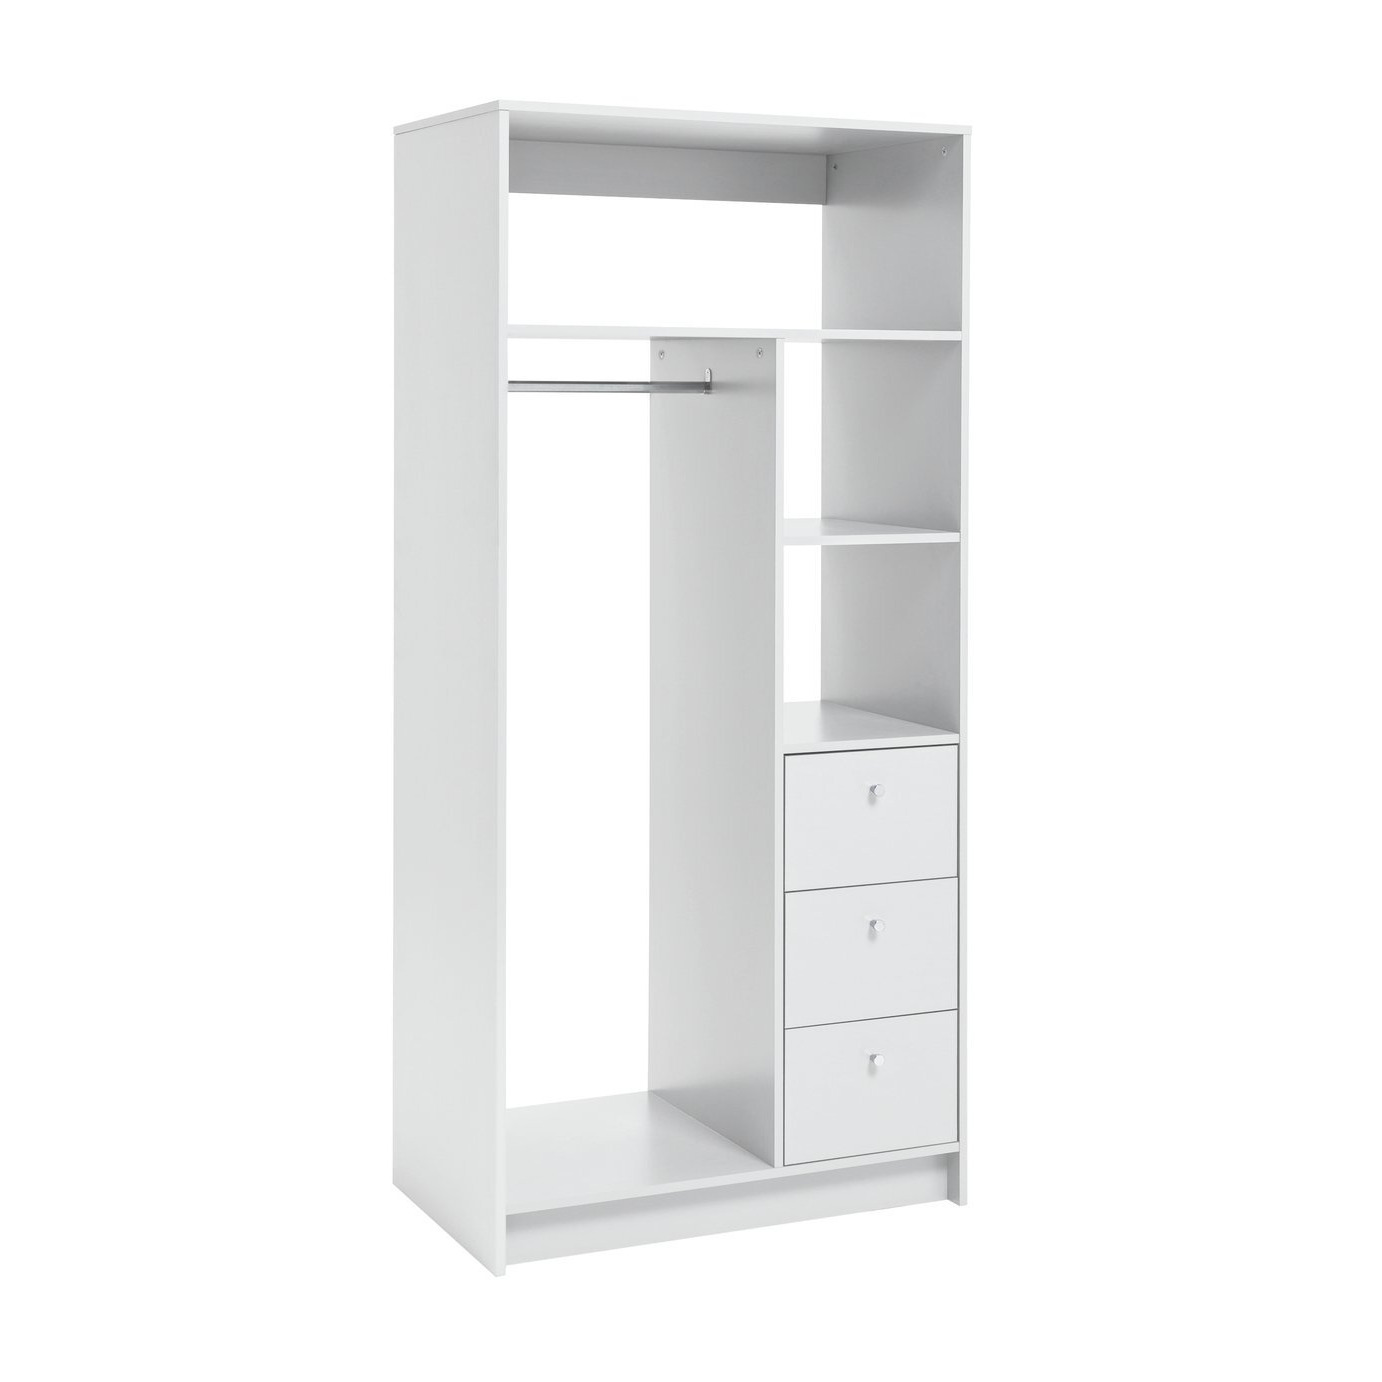 Argos Home Malibu 3 Drawers Open Storage Wardrobe - White - image 1